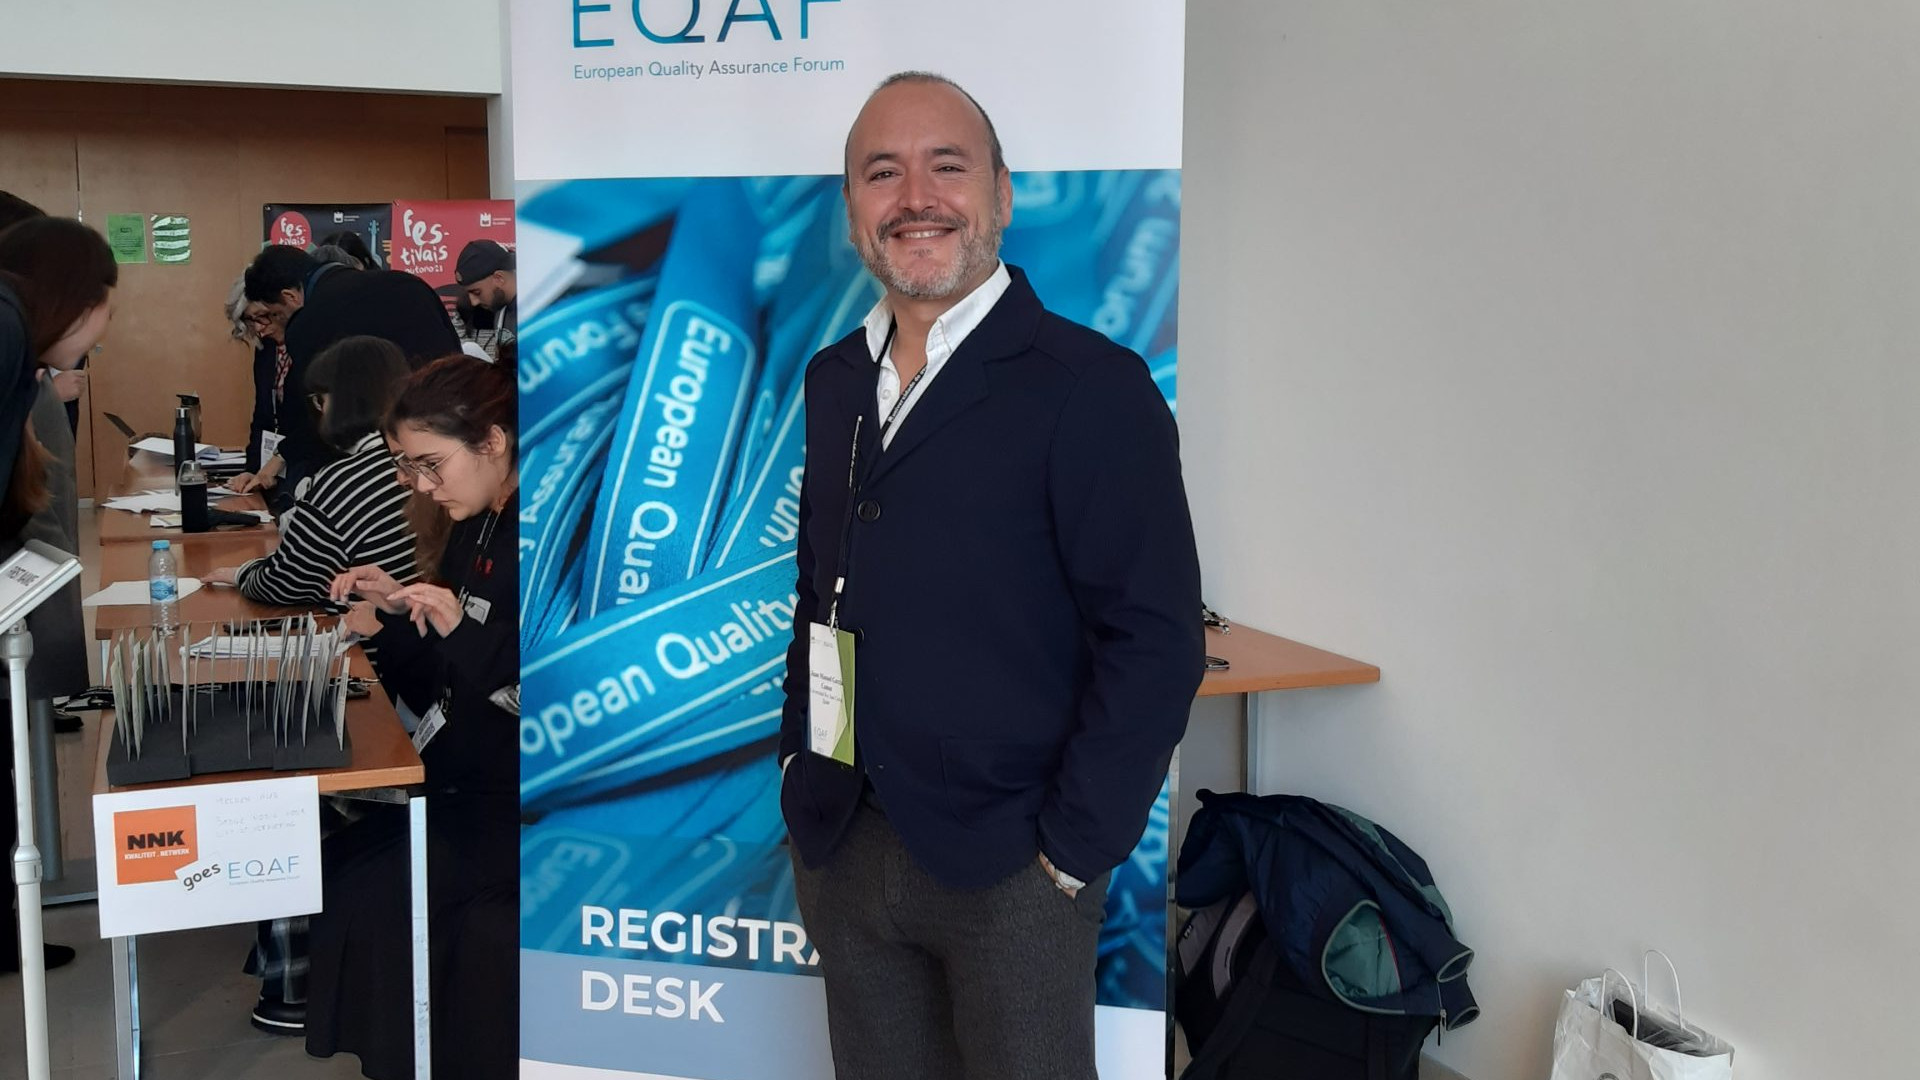 Juan Manuel García Camús, EULiST coordinator at URJC, attends EQAF event